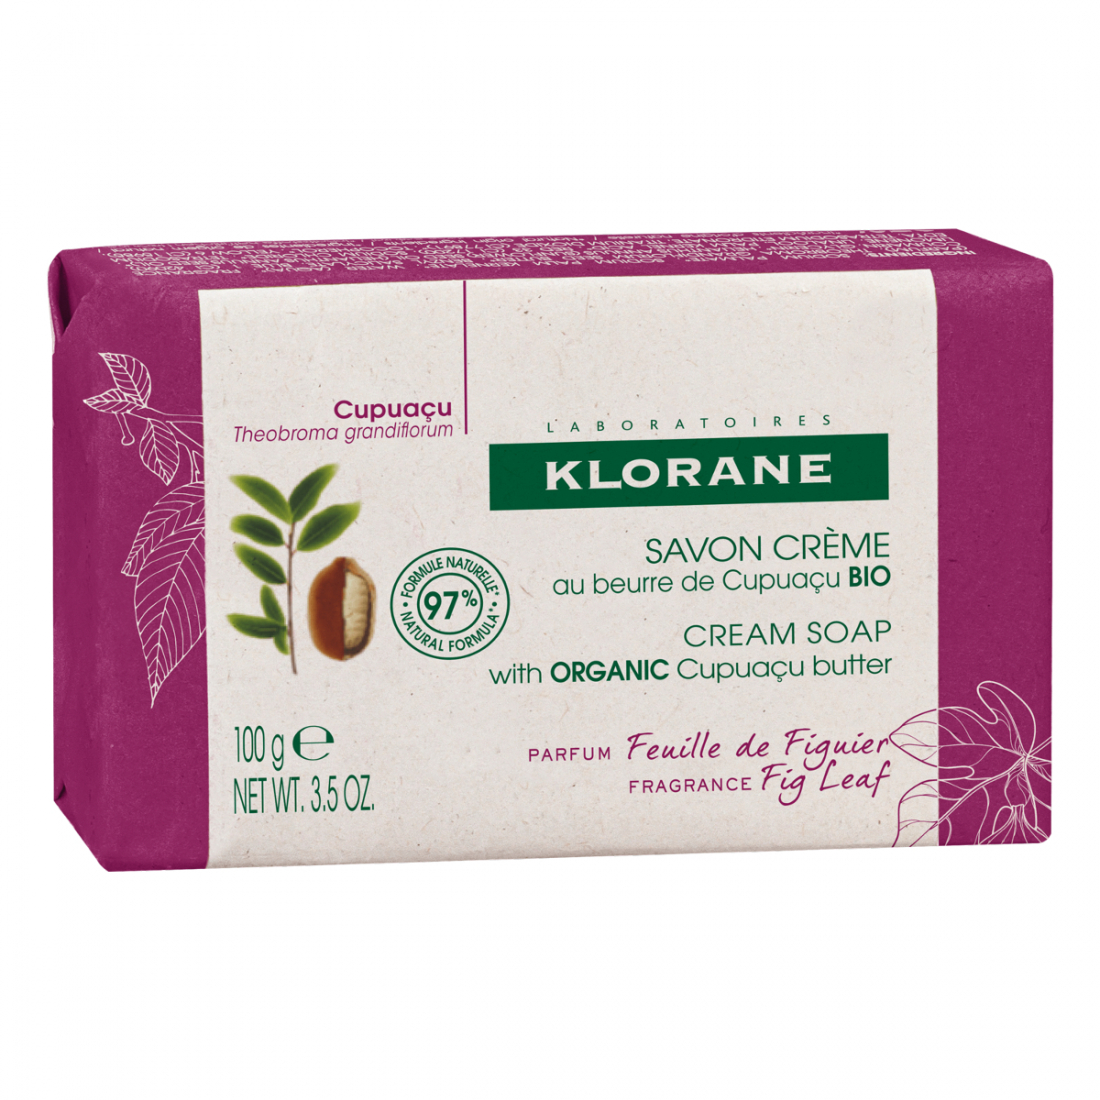 'Feuille De Figuier' Soap Cream - 100 g